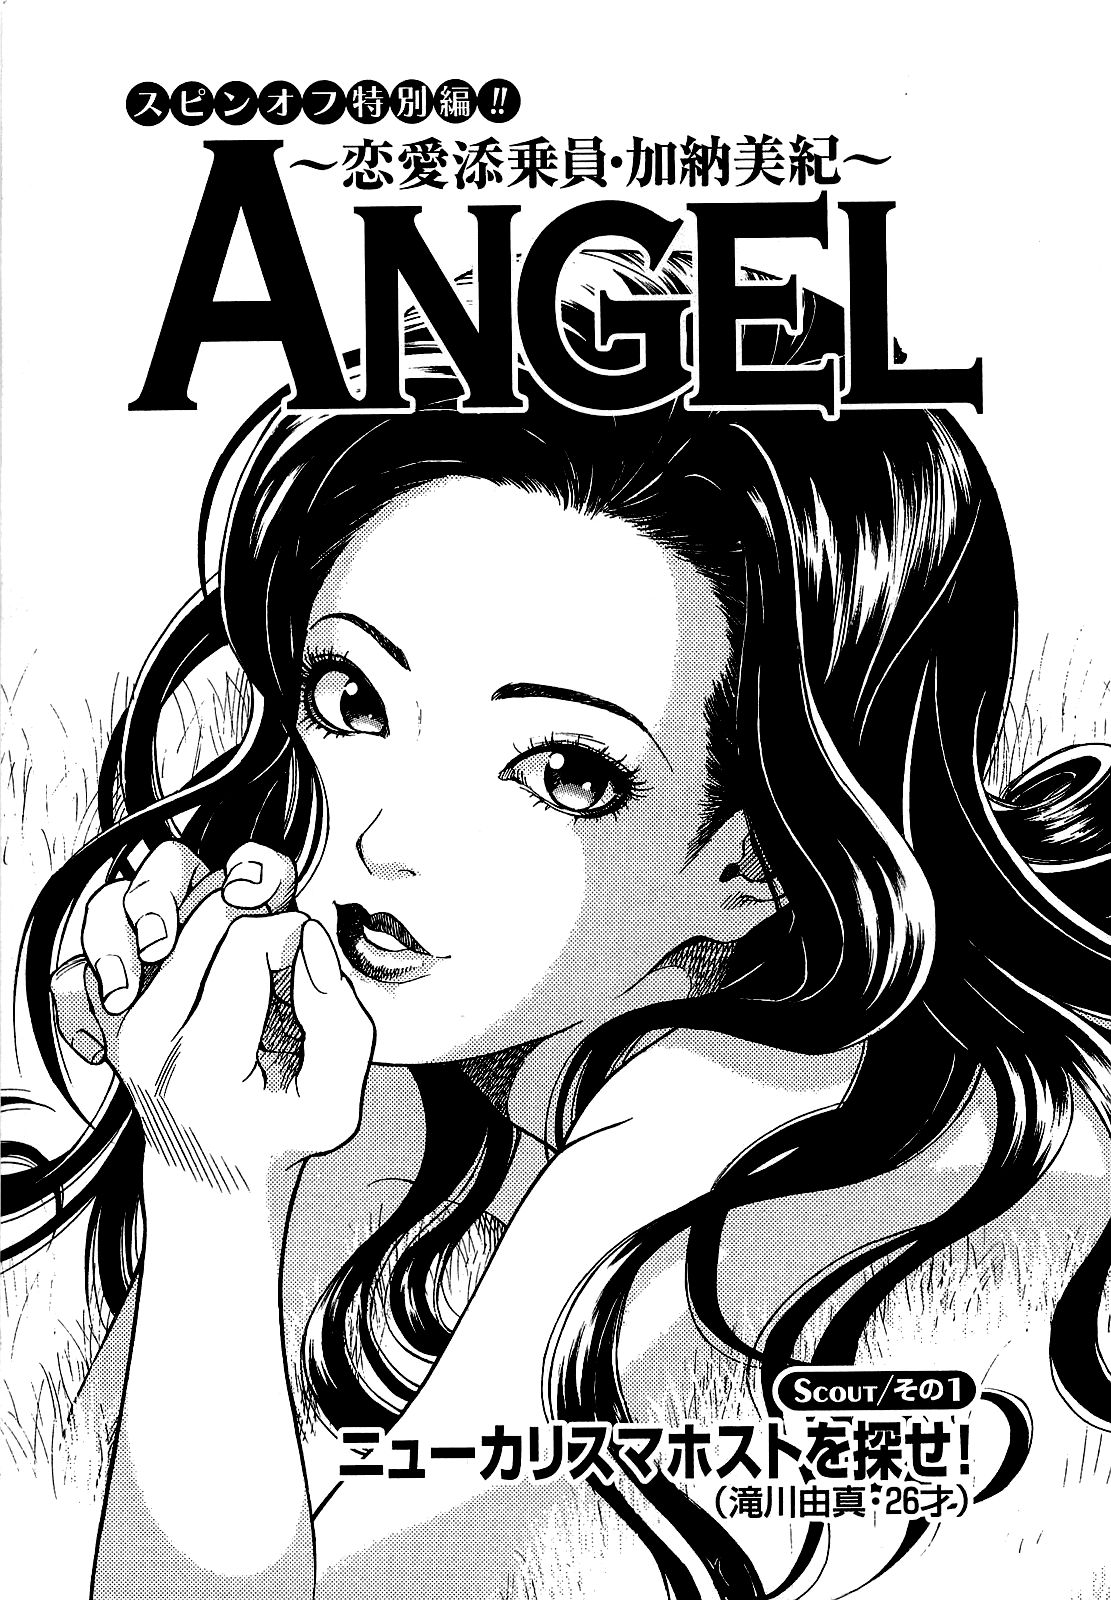 [遊人] ANGEL~SEASON II~ 第1巻